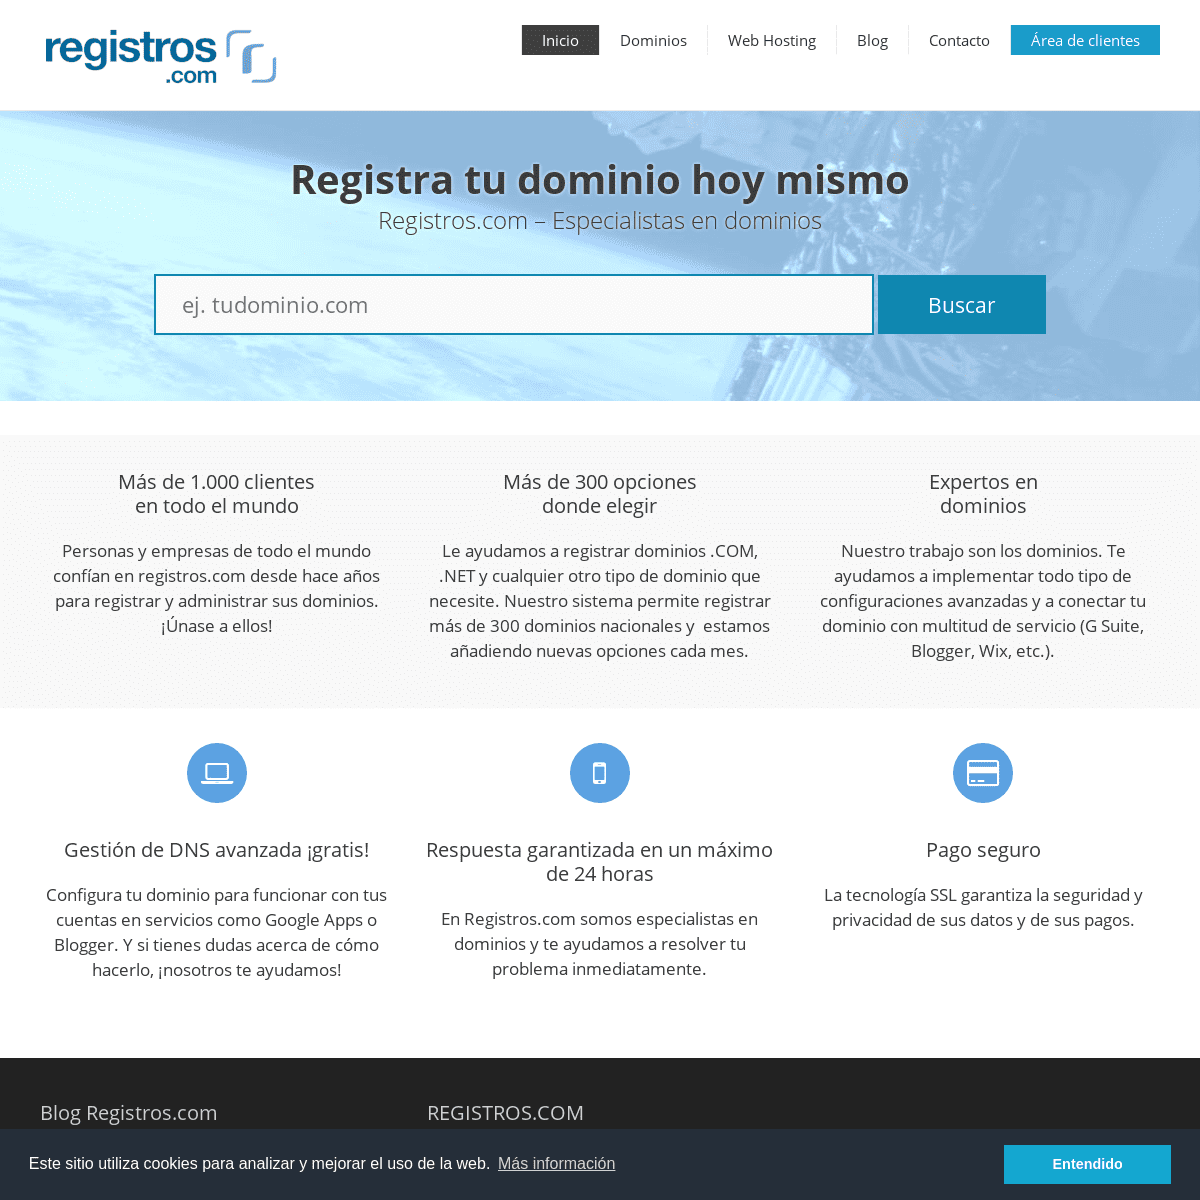 A complete backup of registros.com